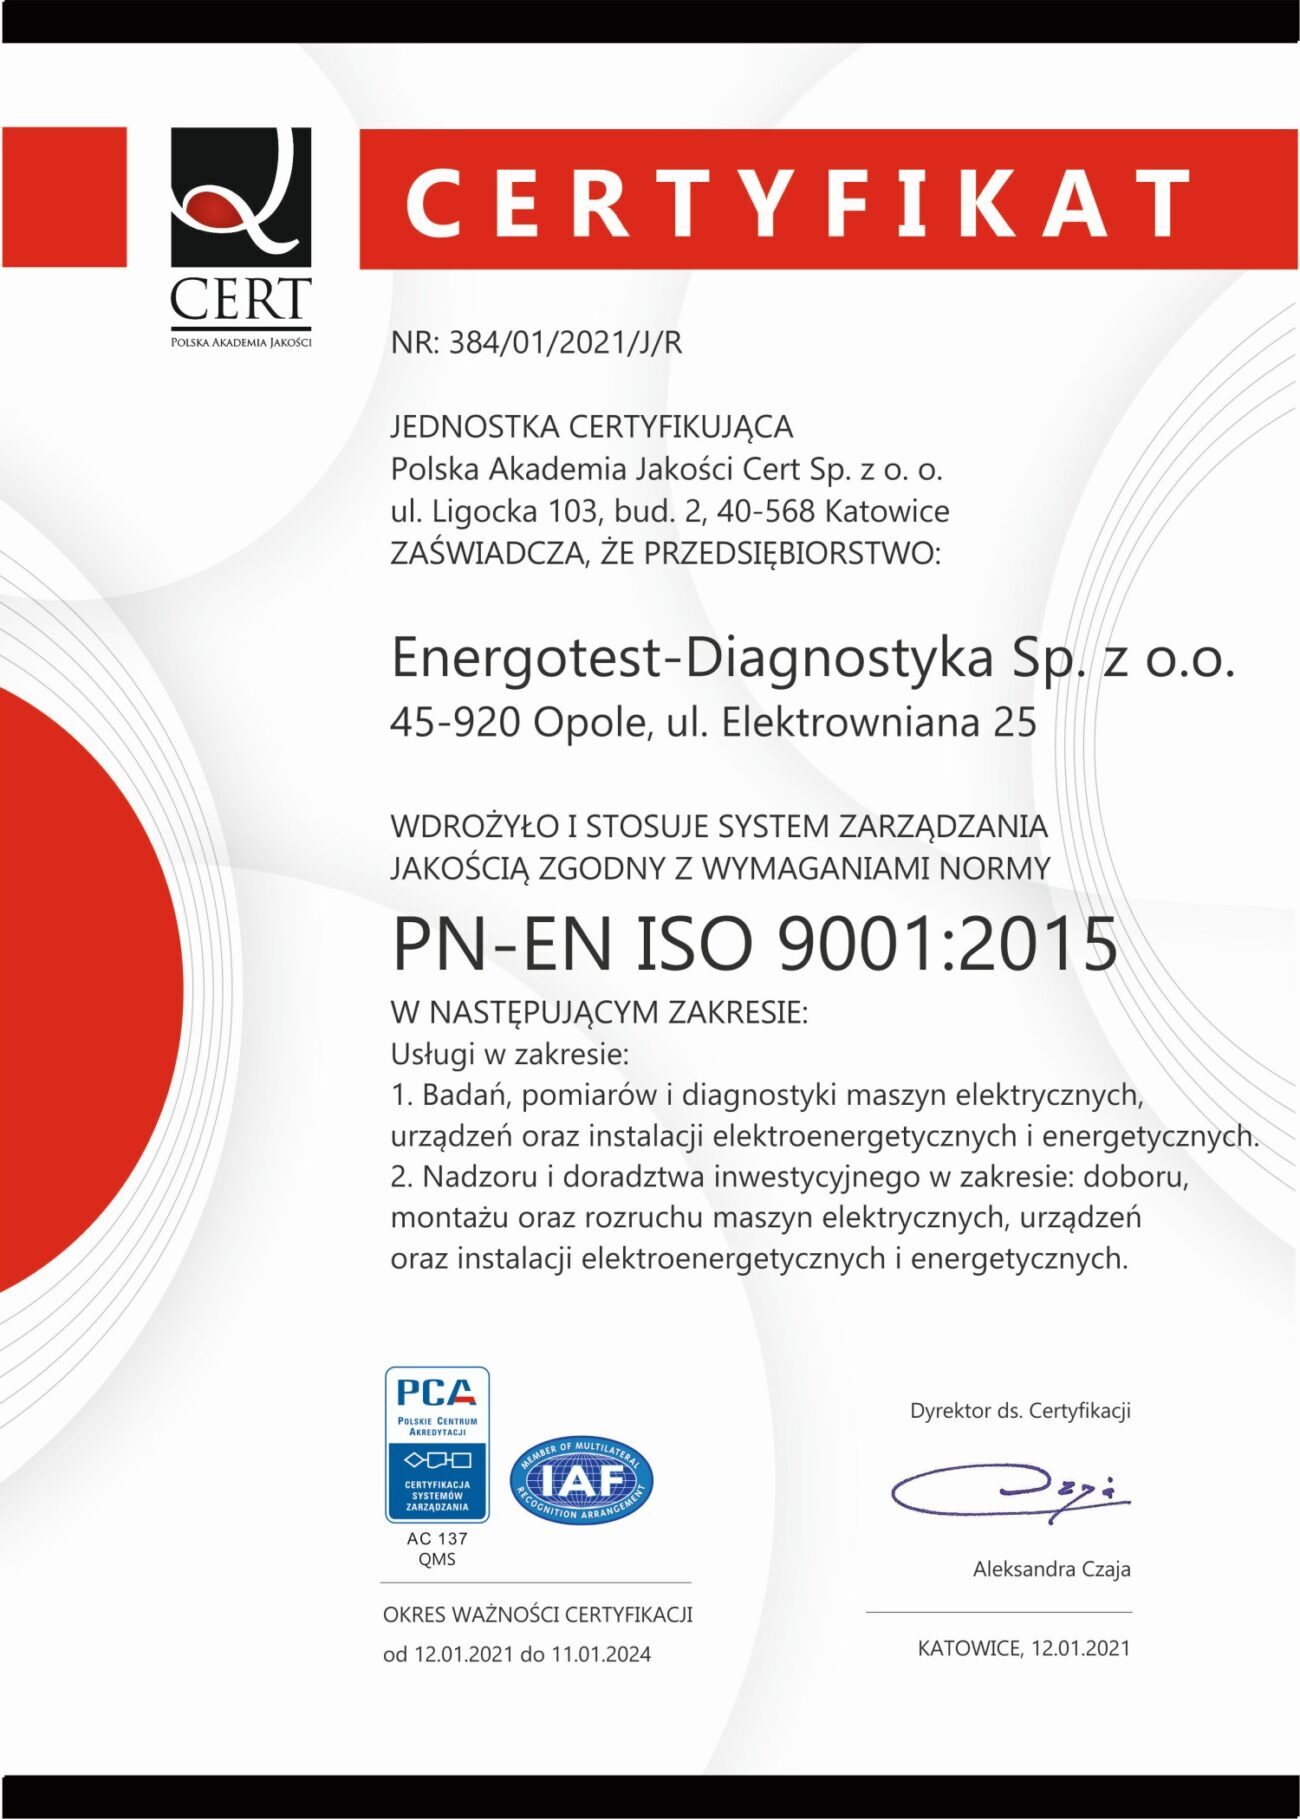 Energotest-Diagnostyka Certyfikat PN-EN ISO 9001:2015 PL 2021-2024